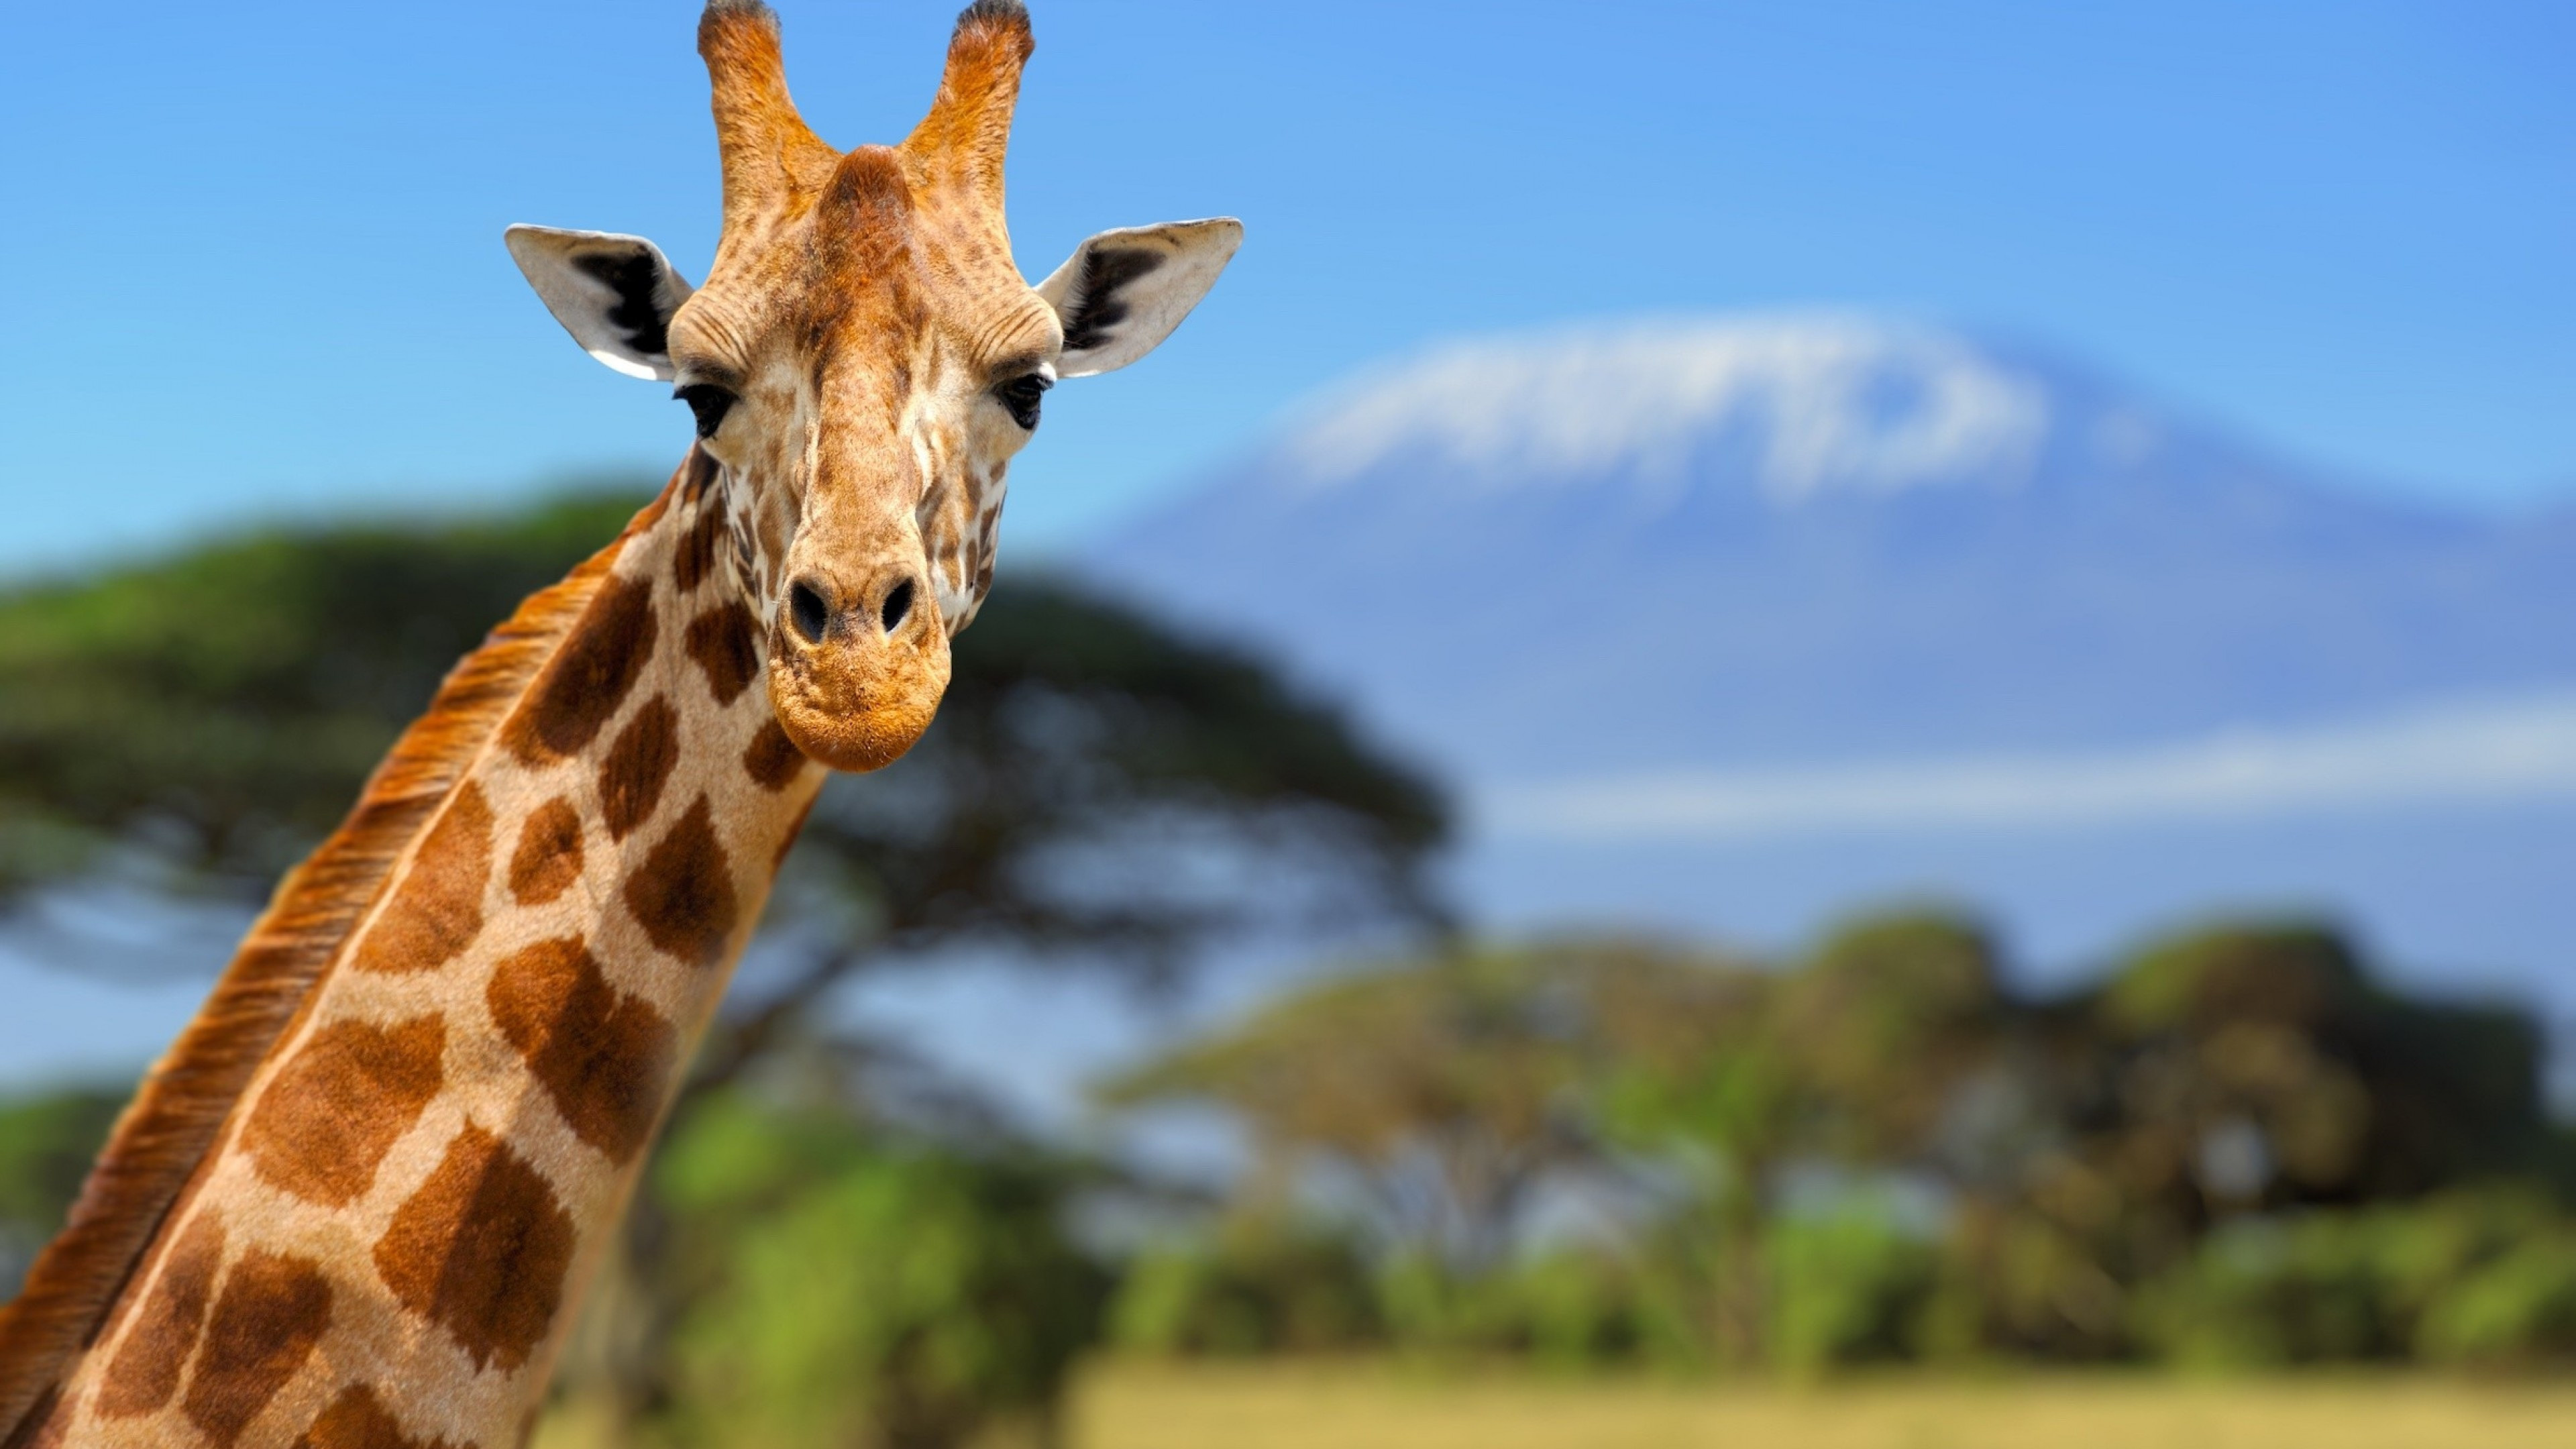 Giraffe: The world's tallest mammals, thanks to their towering legs and long necks. 3840x2160 4K Wallpaper.